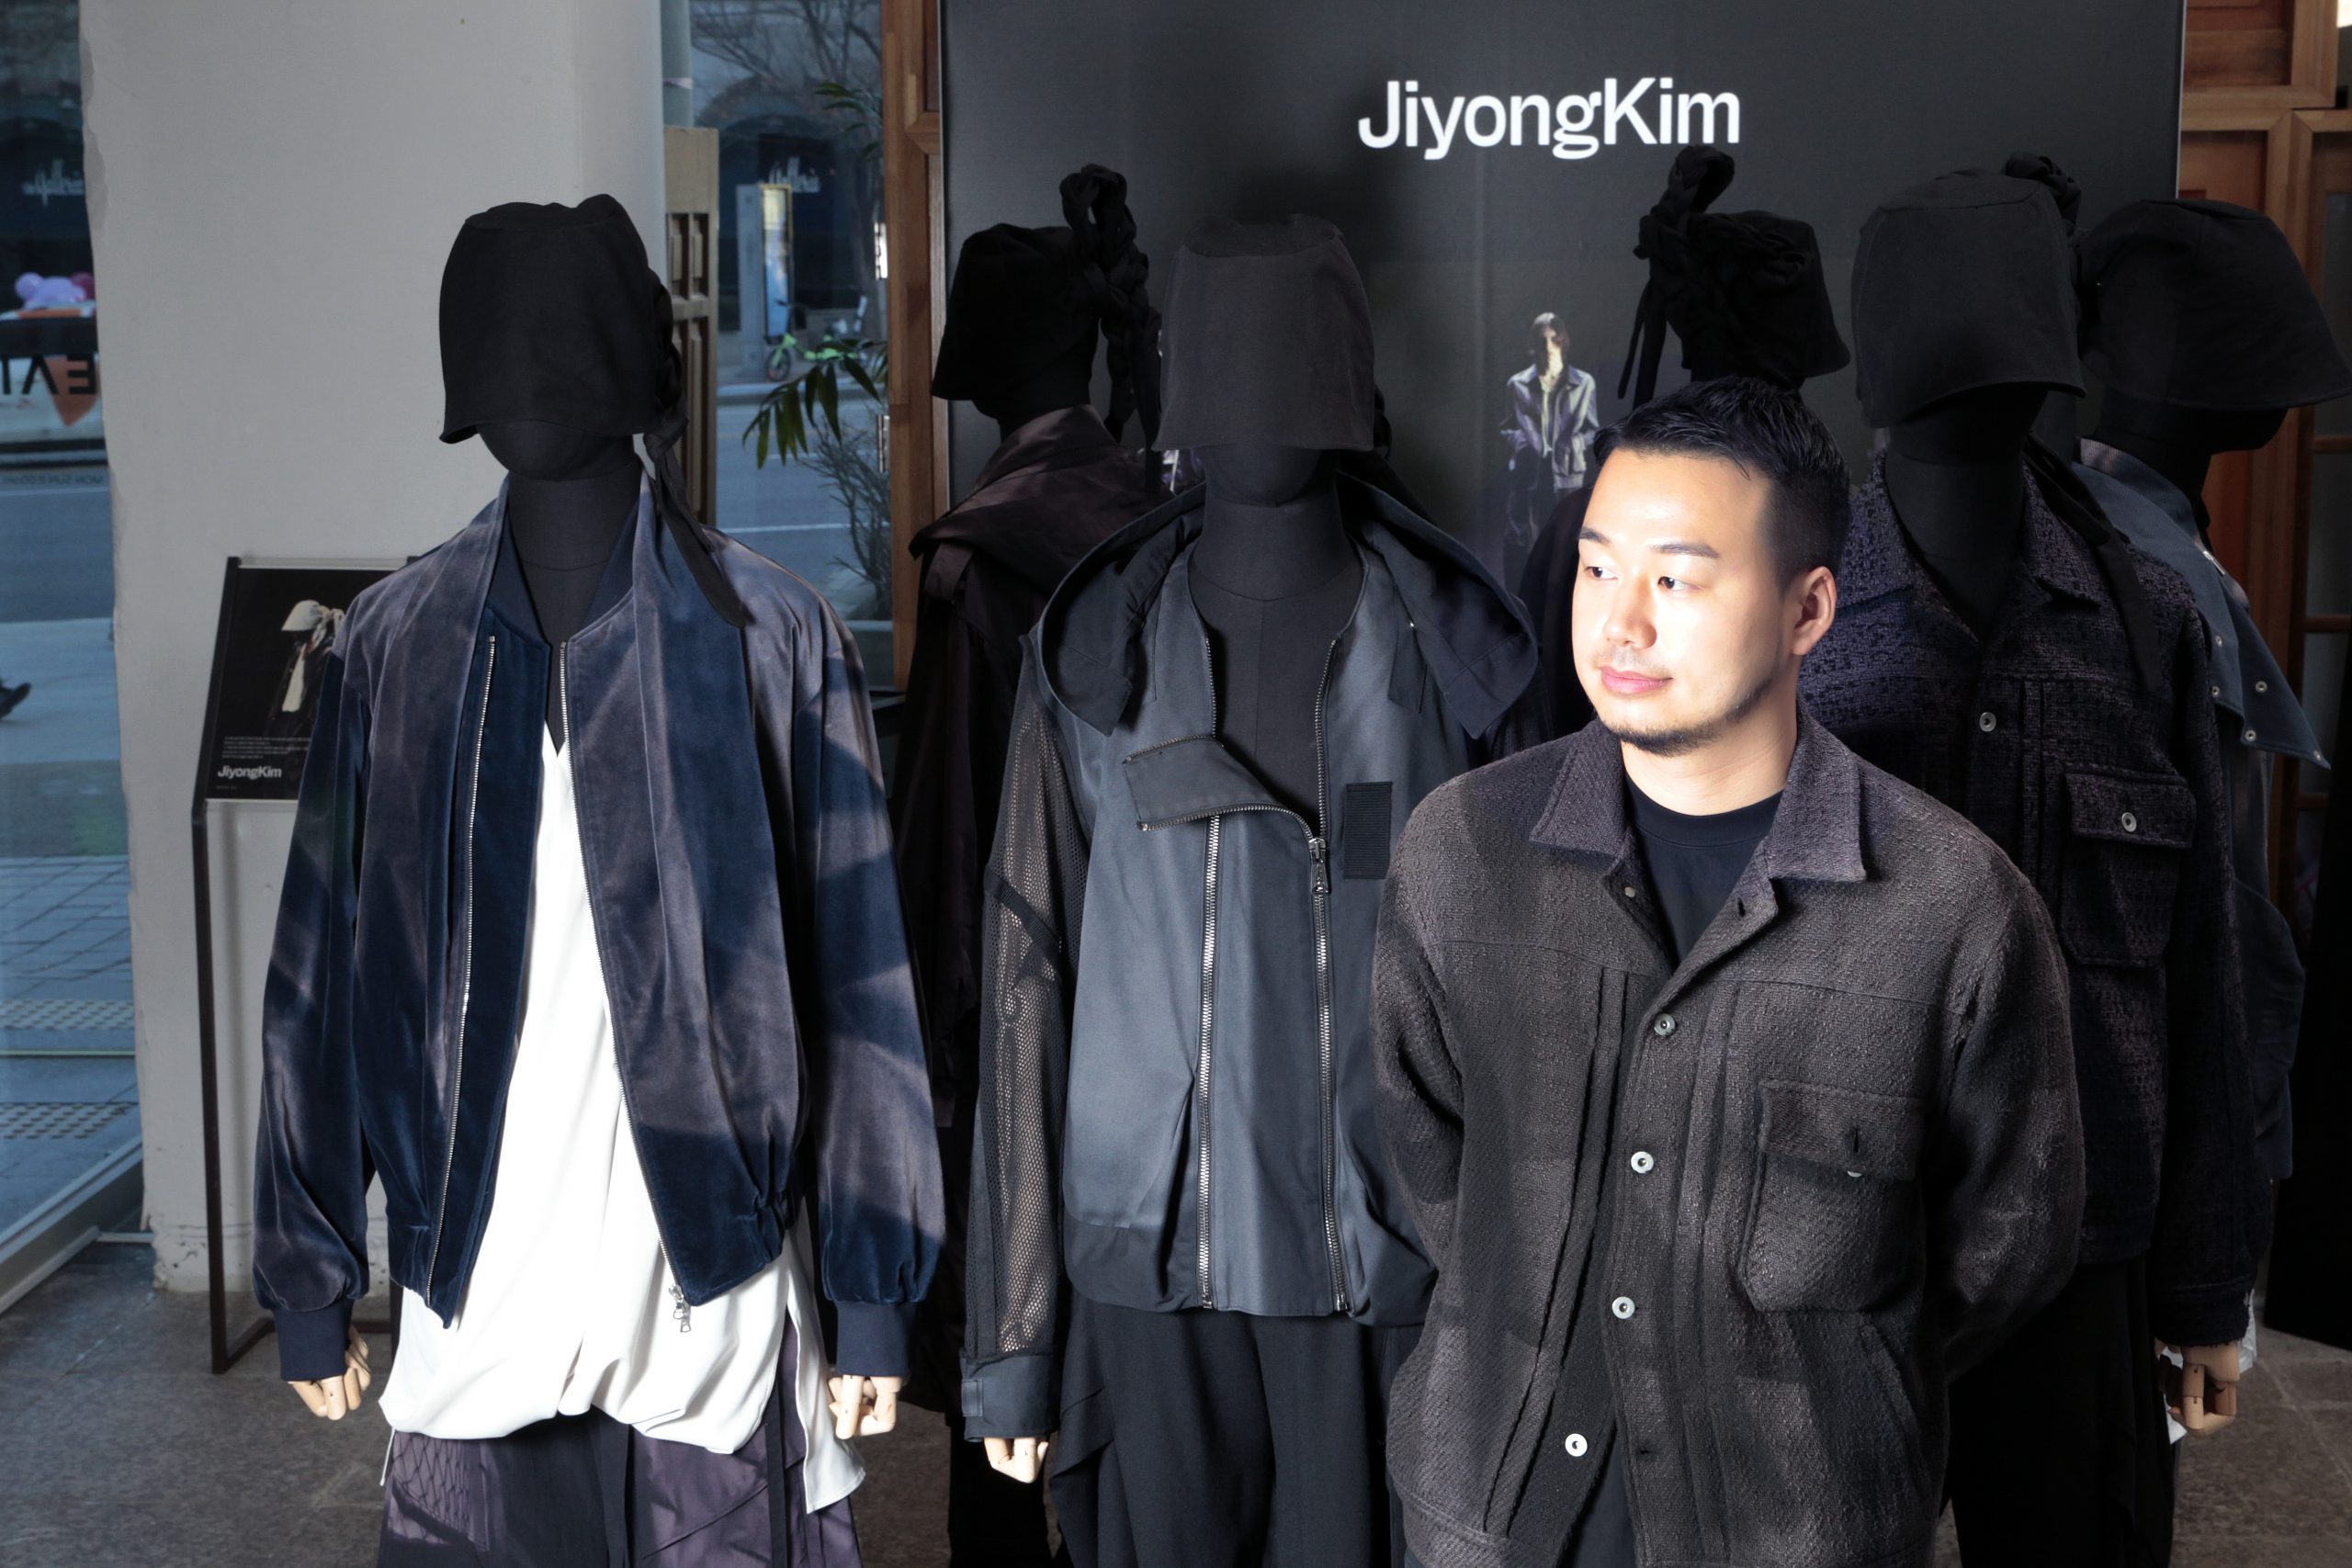 In 2021, Jiyong Kim launched his own brand, JiyongKim.